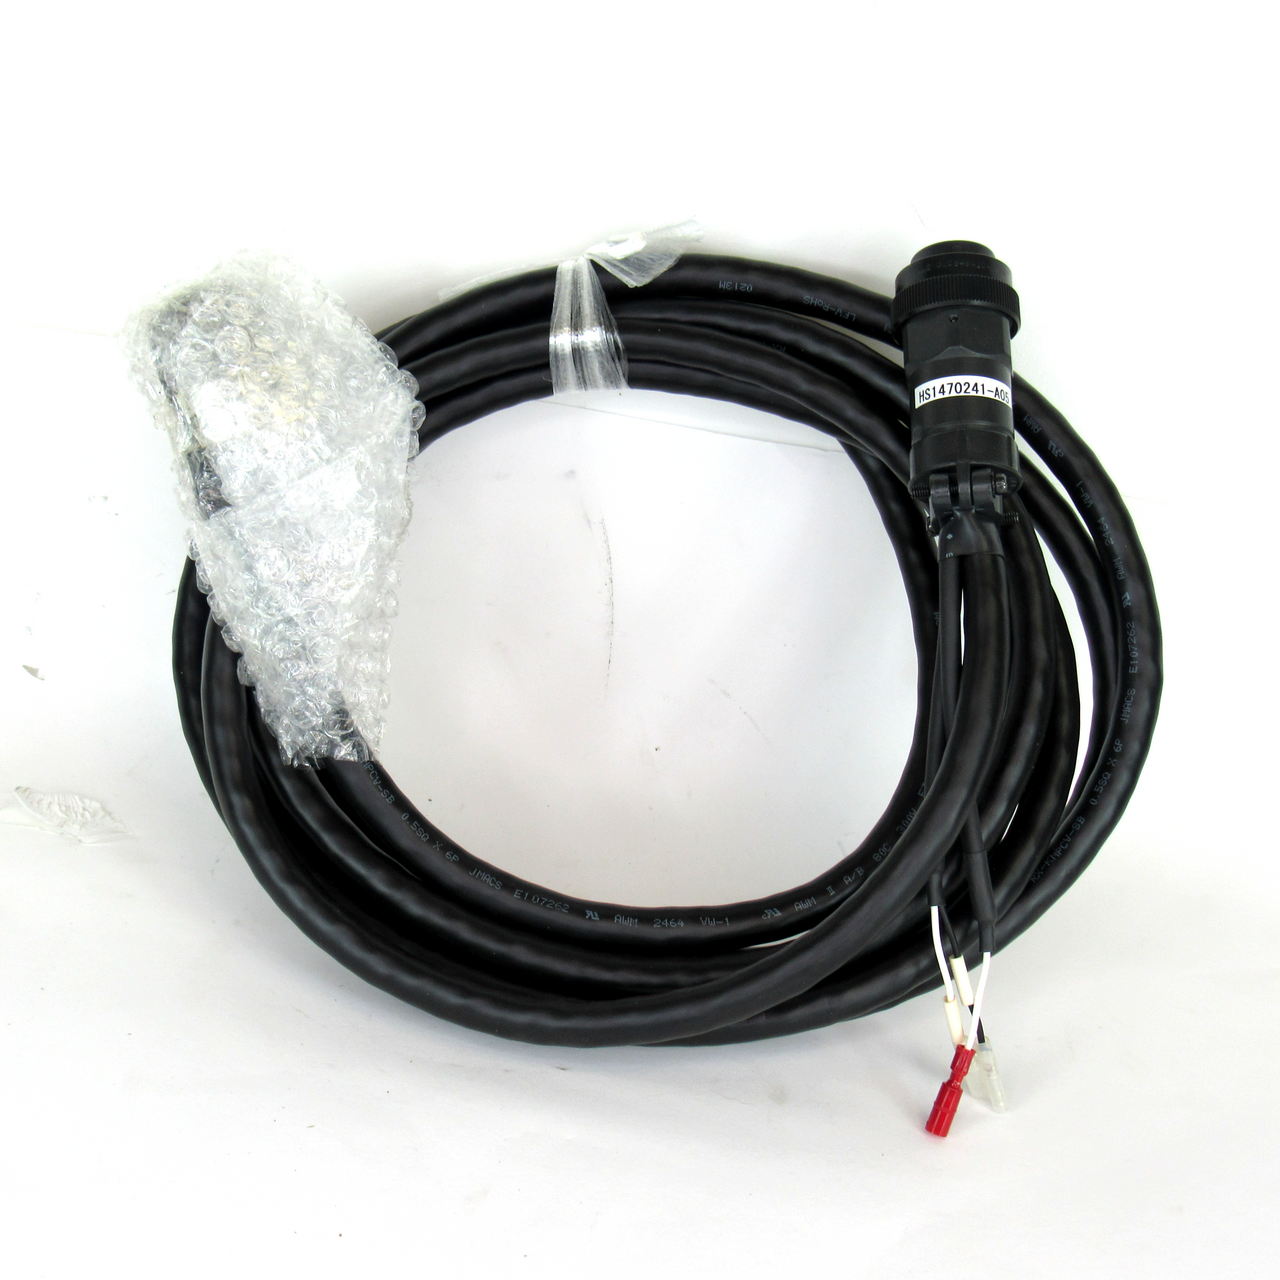 Yaskawa HS1470241-A05 Robotic Control Cable